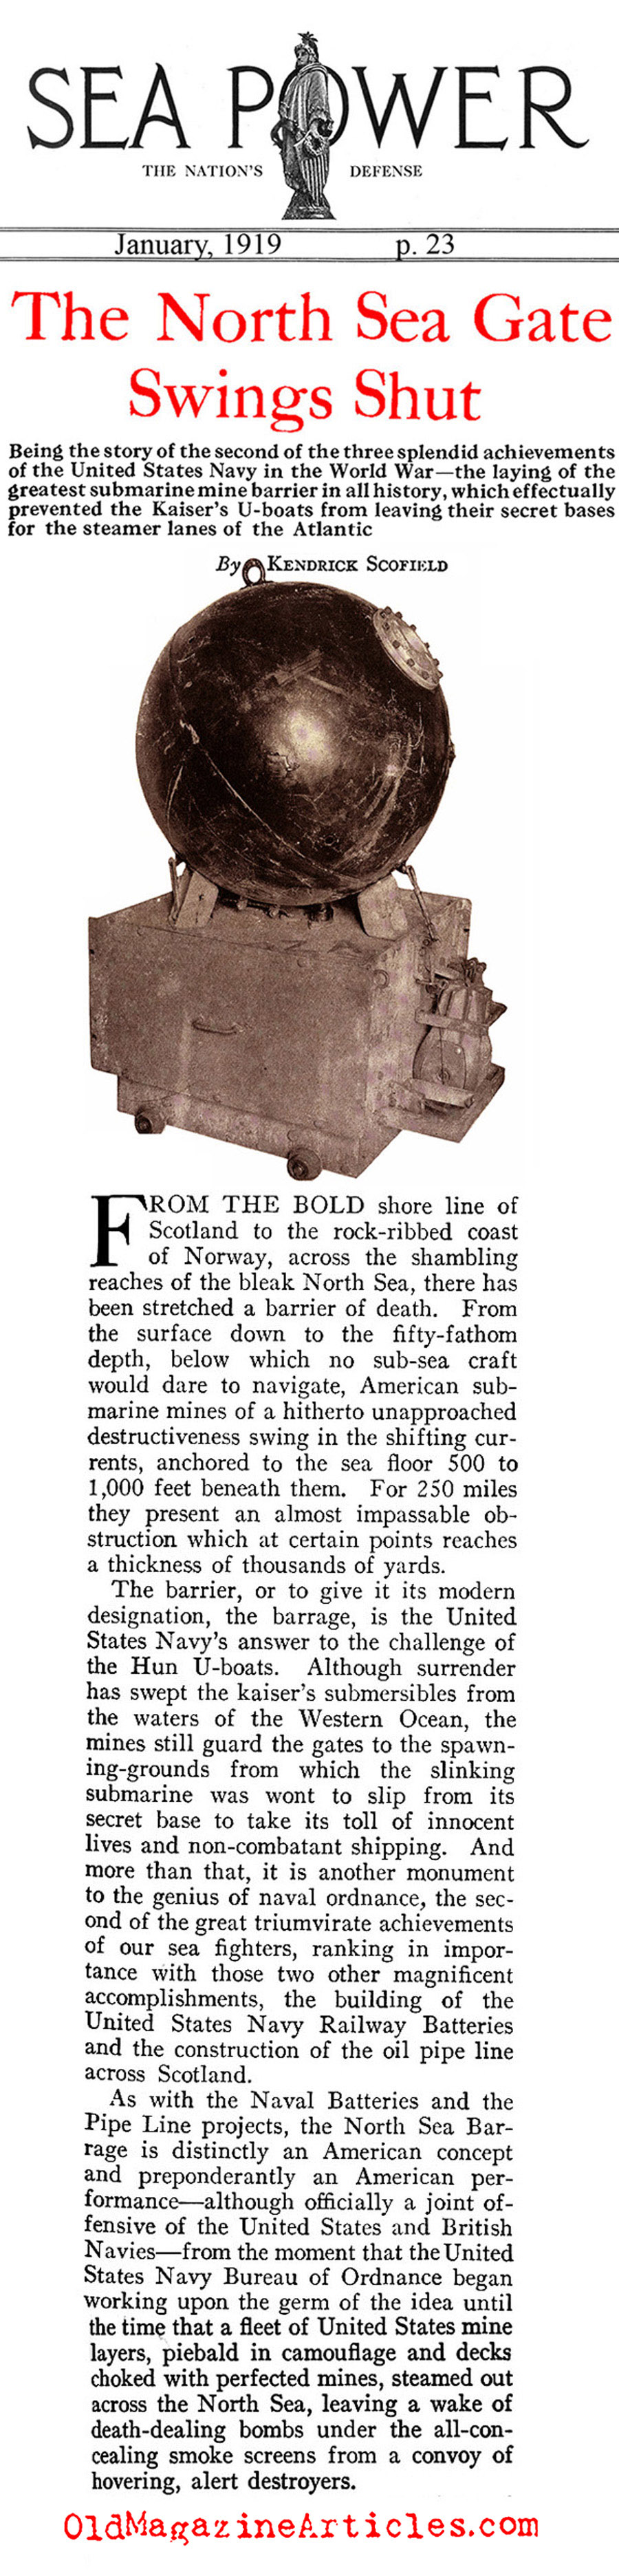 The Mining of the Seas (Sea Power, 1919)